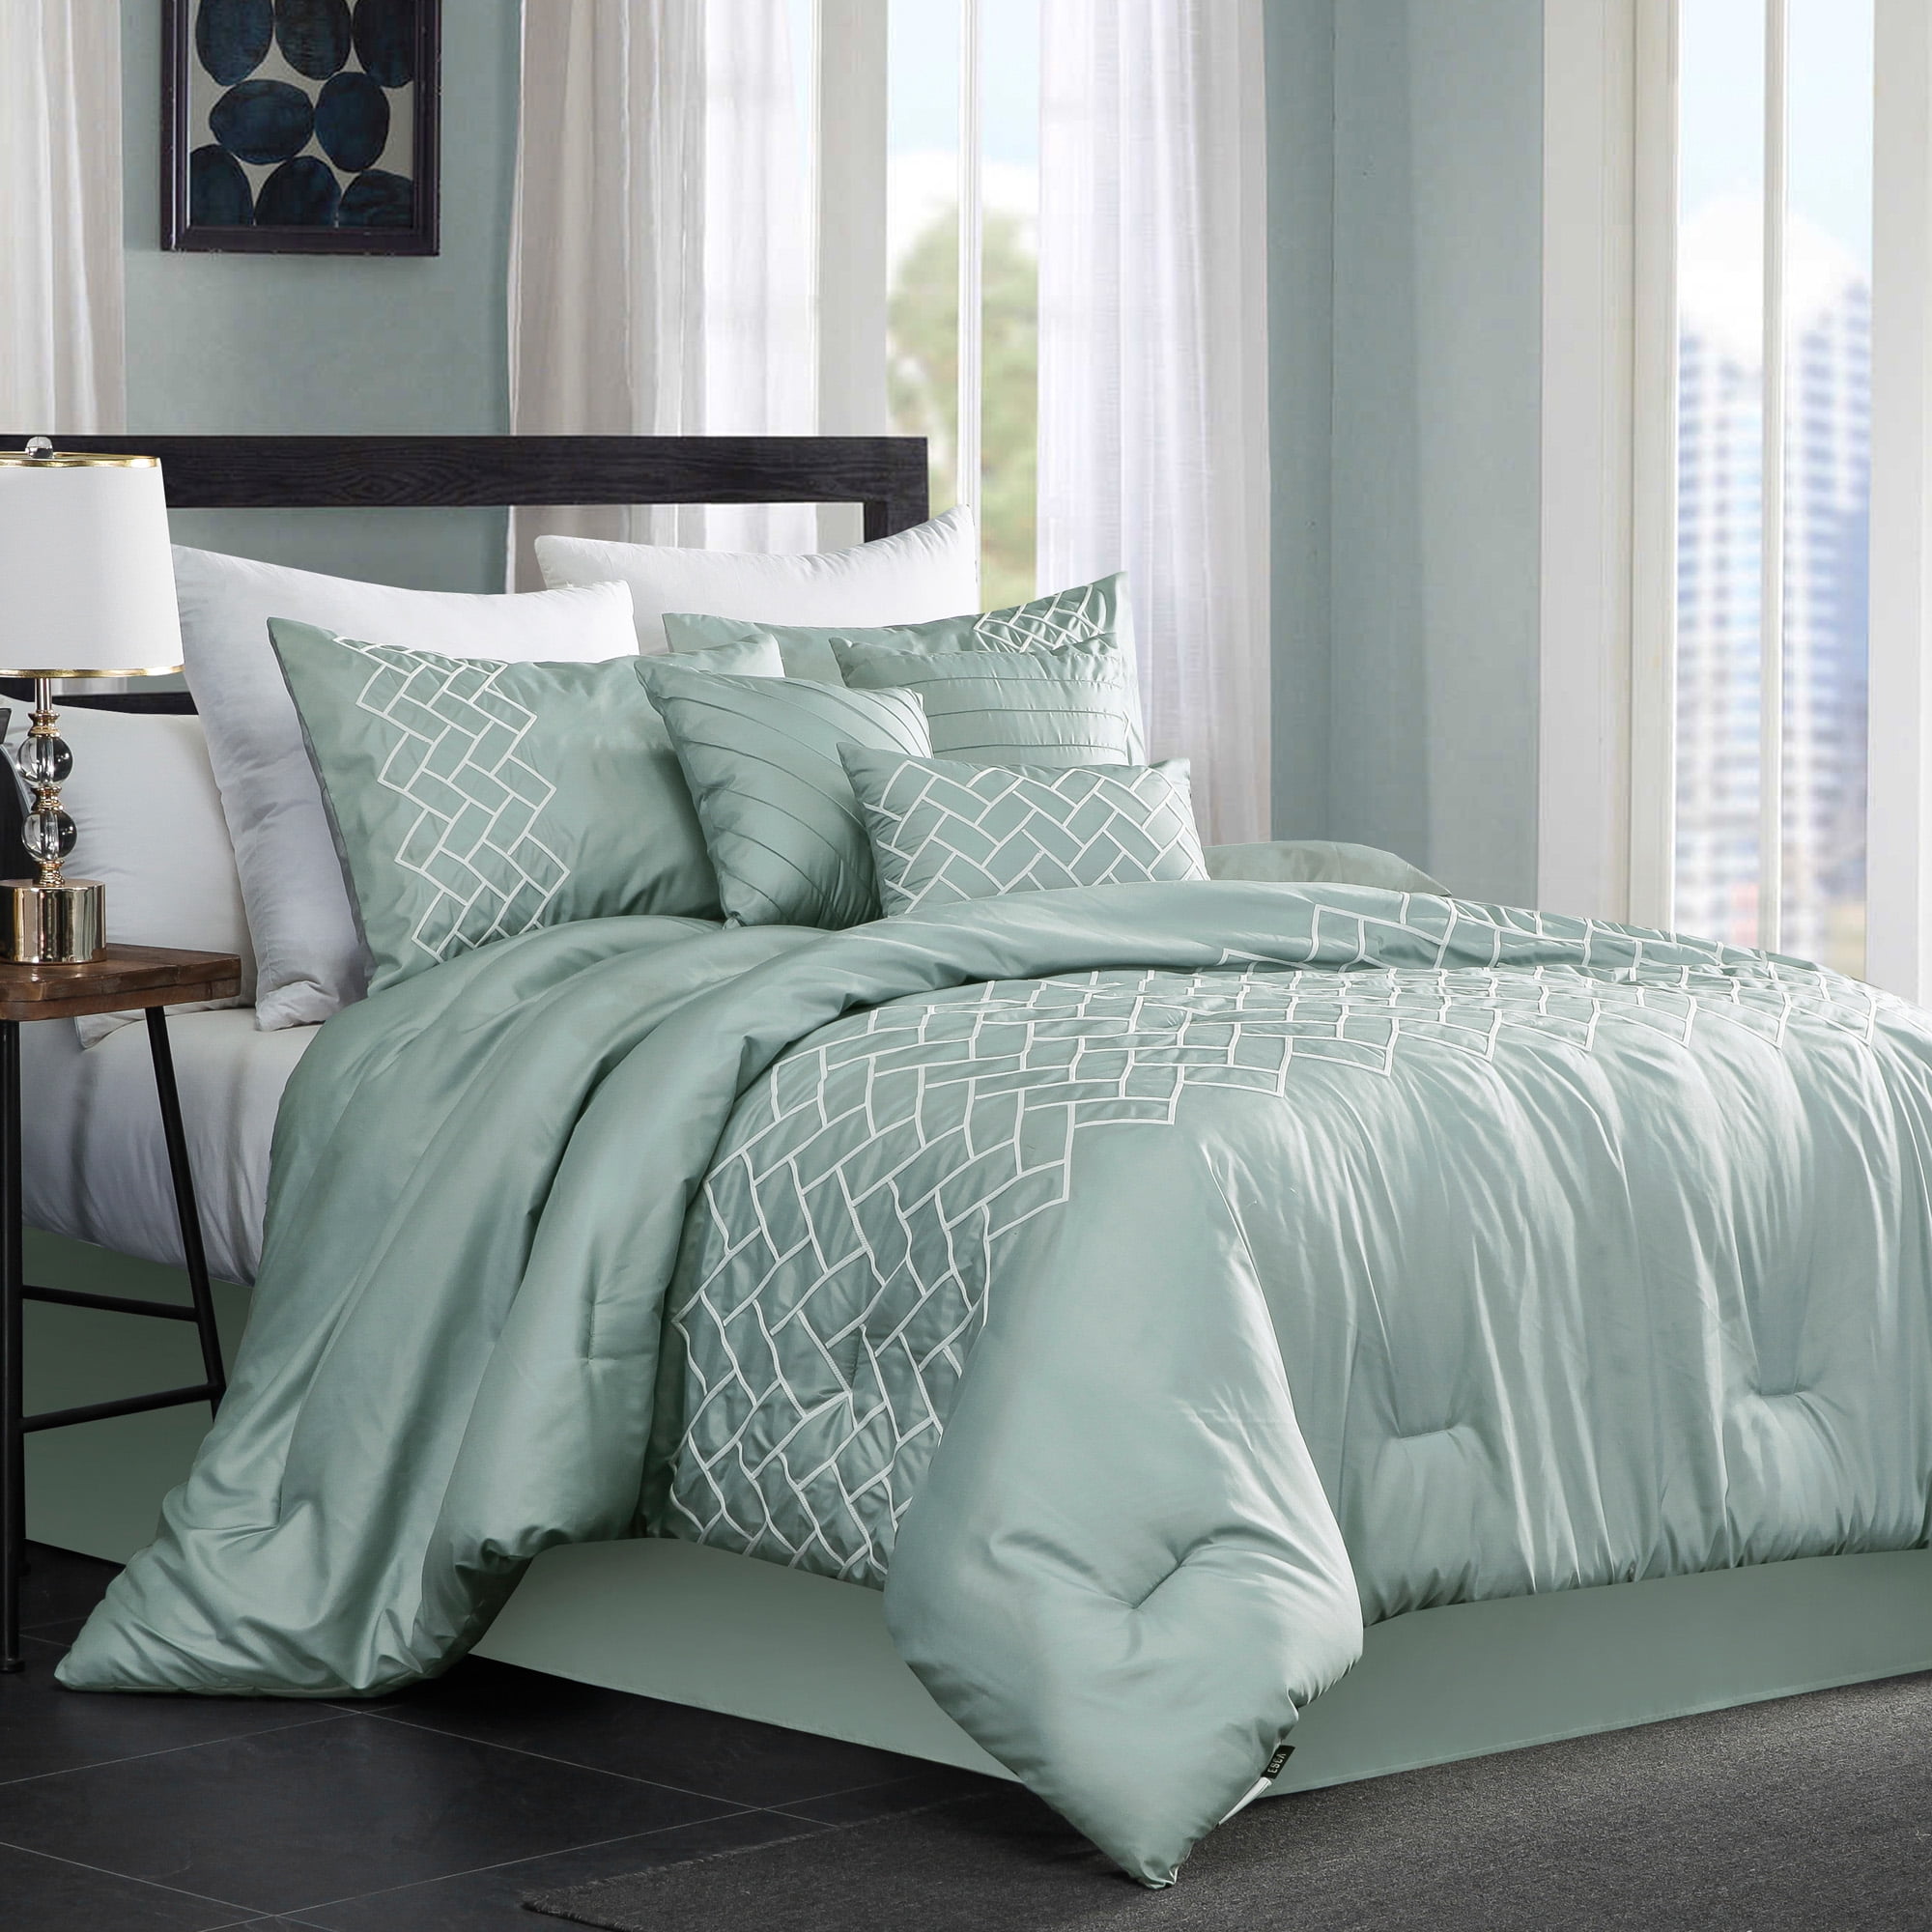 HGMart Bedding Comforter Set Bed In A Bag 7 Piece Luxury